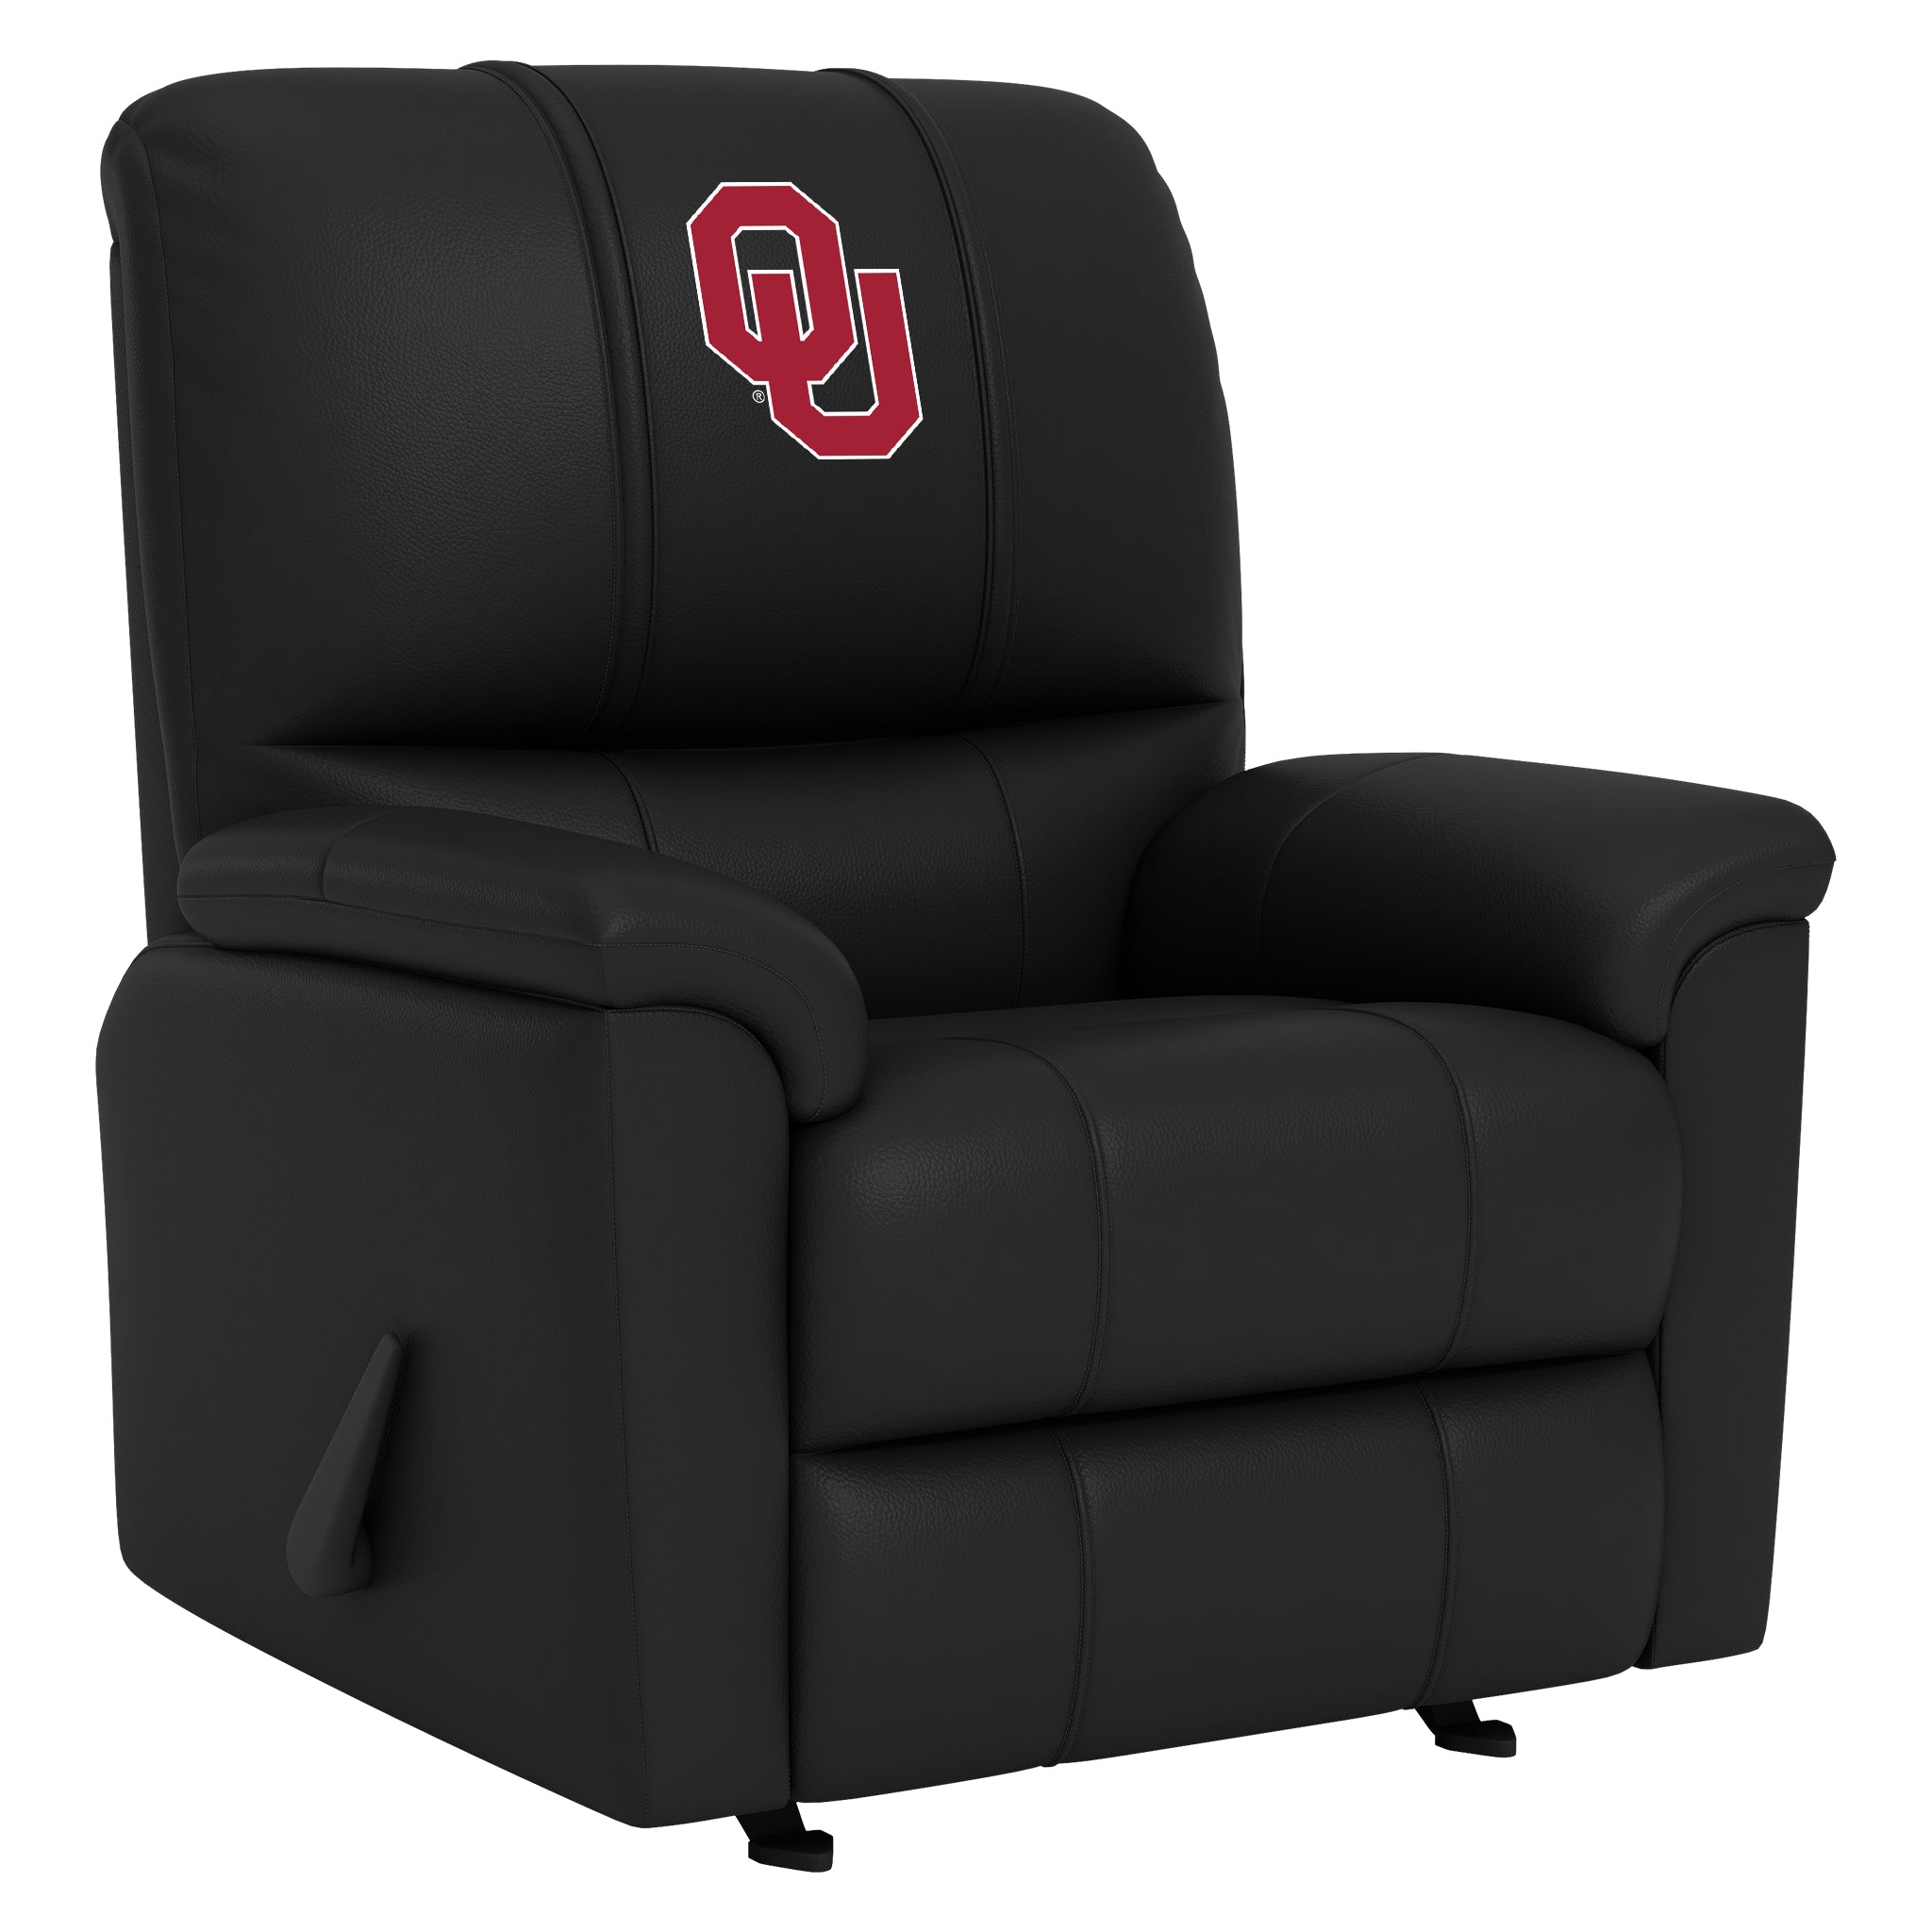 Oklahoma Sooners Silver Club Chair with Oklahoma Sooners Logo